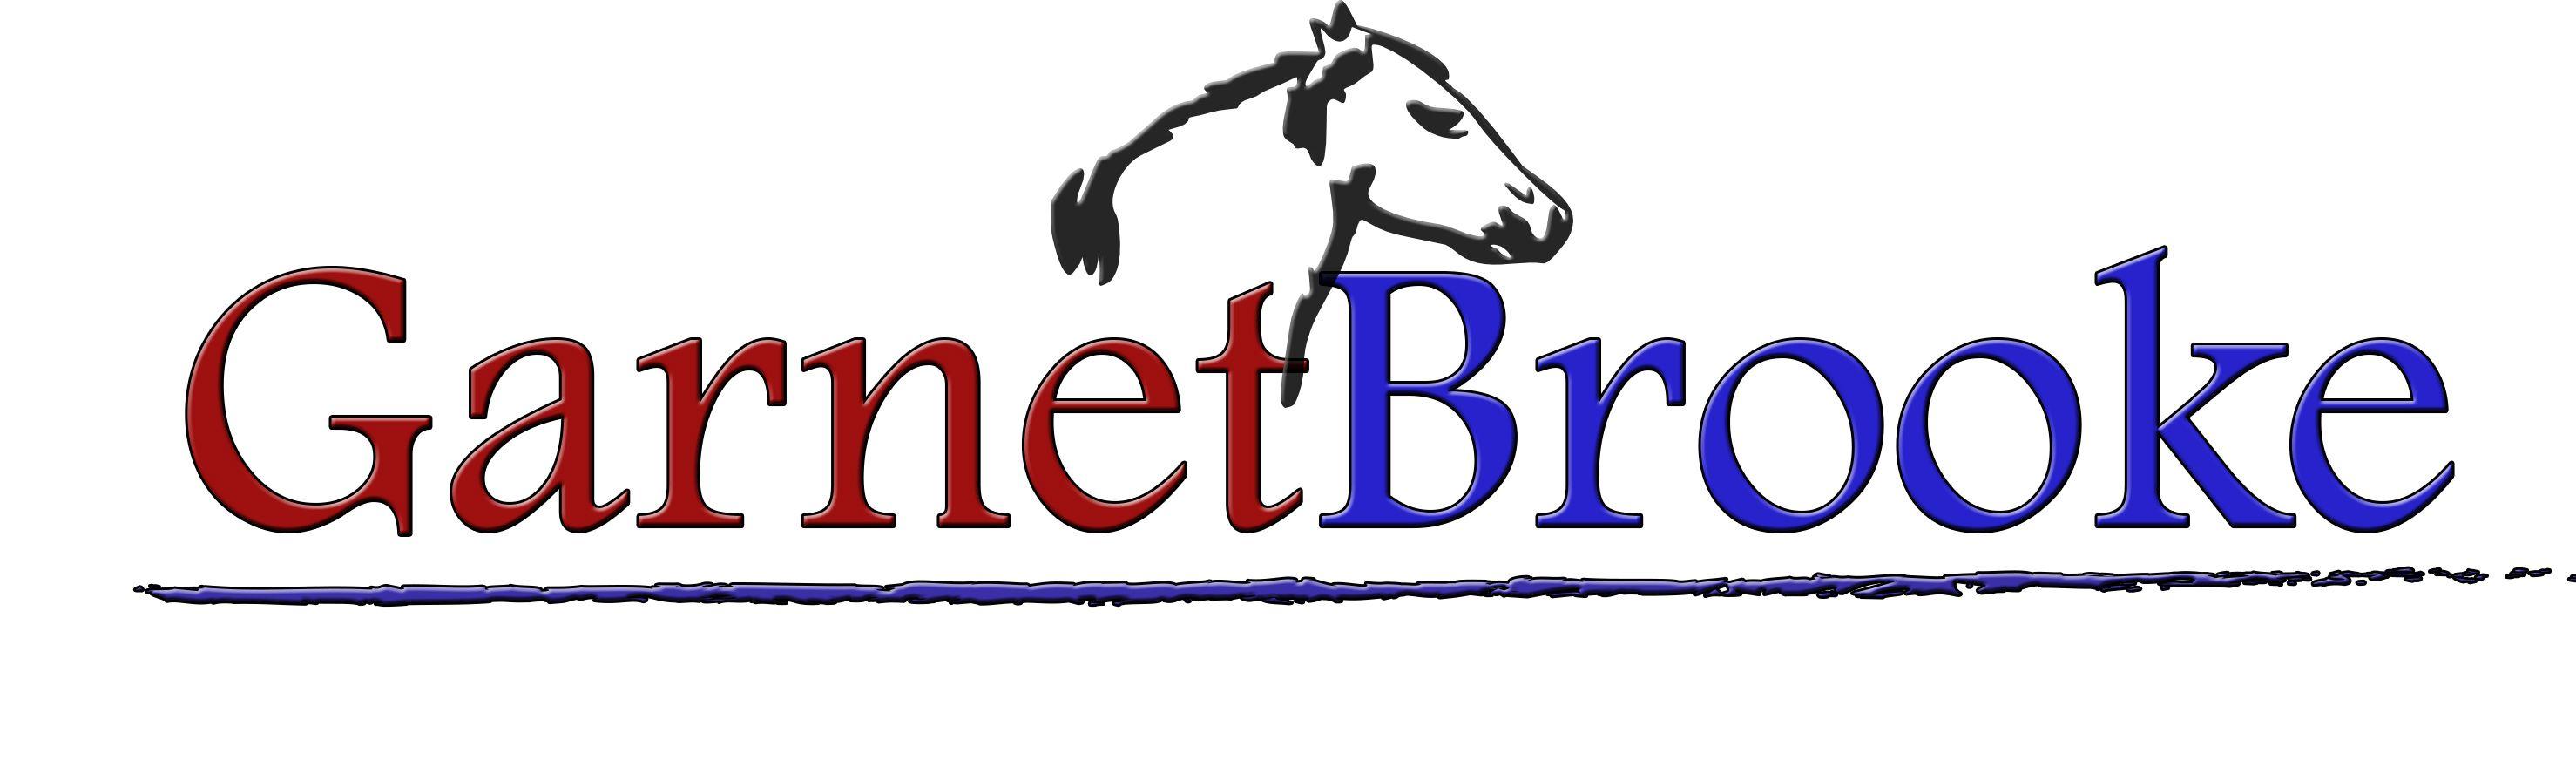 Thoroughbred Logo - The logo for GarnetBrooke, the thoroughbred horse farm across ...